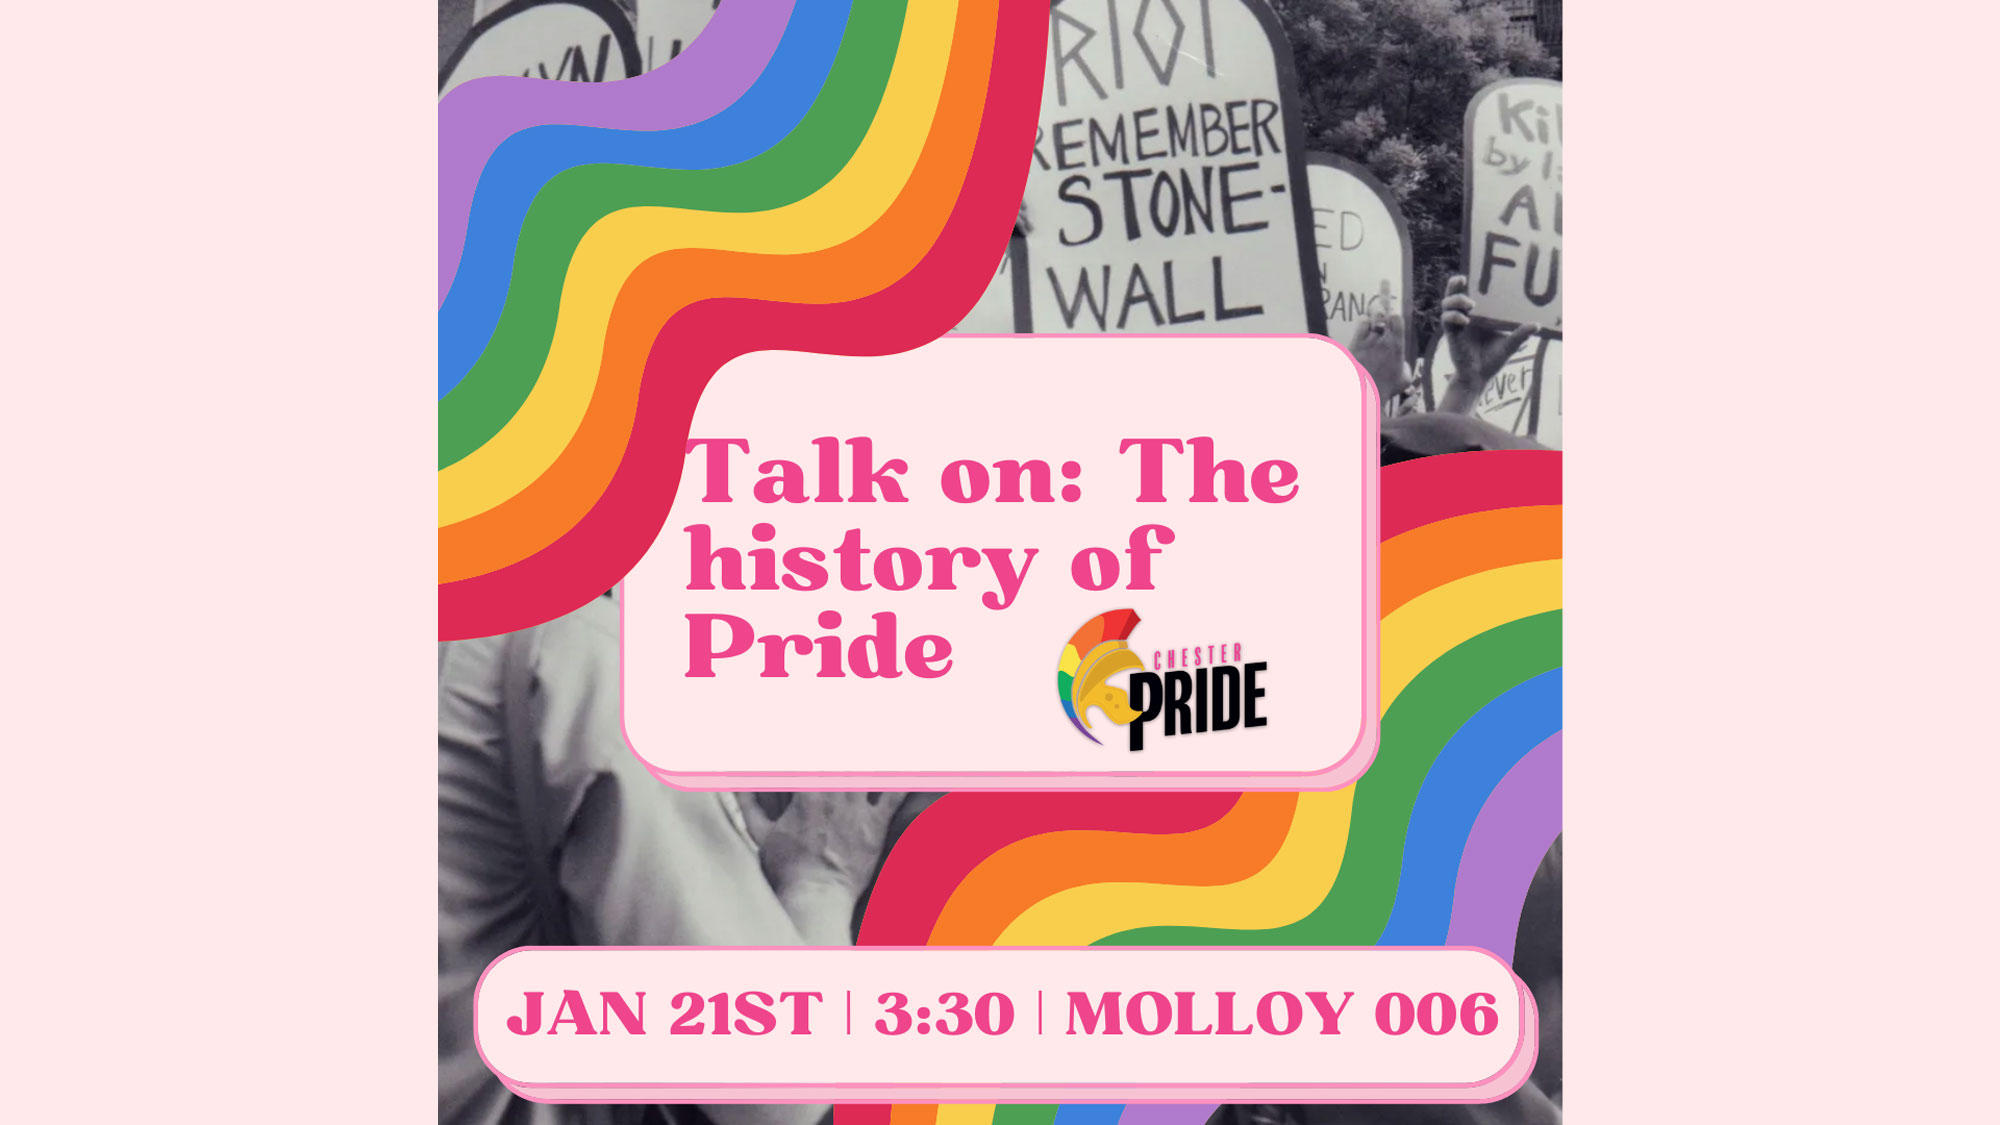 History of Pride Talk